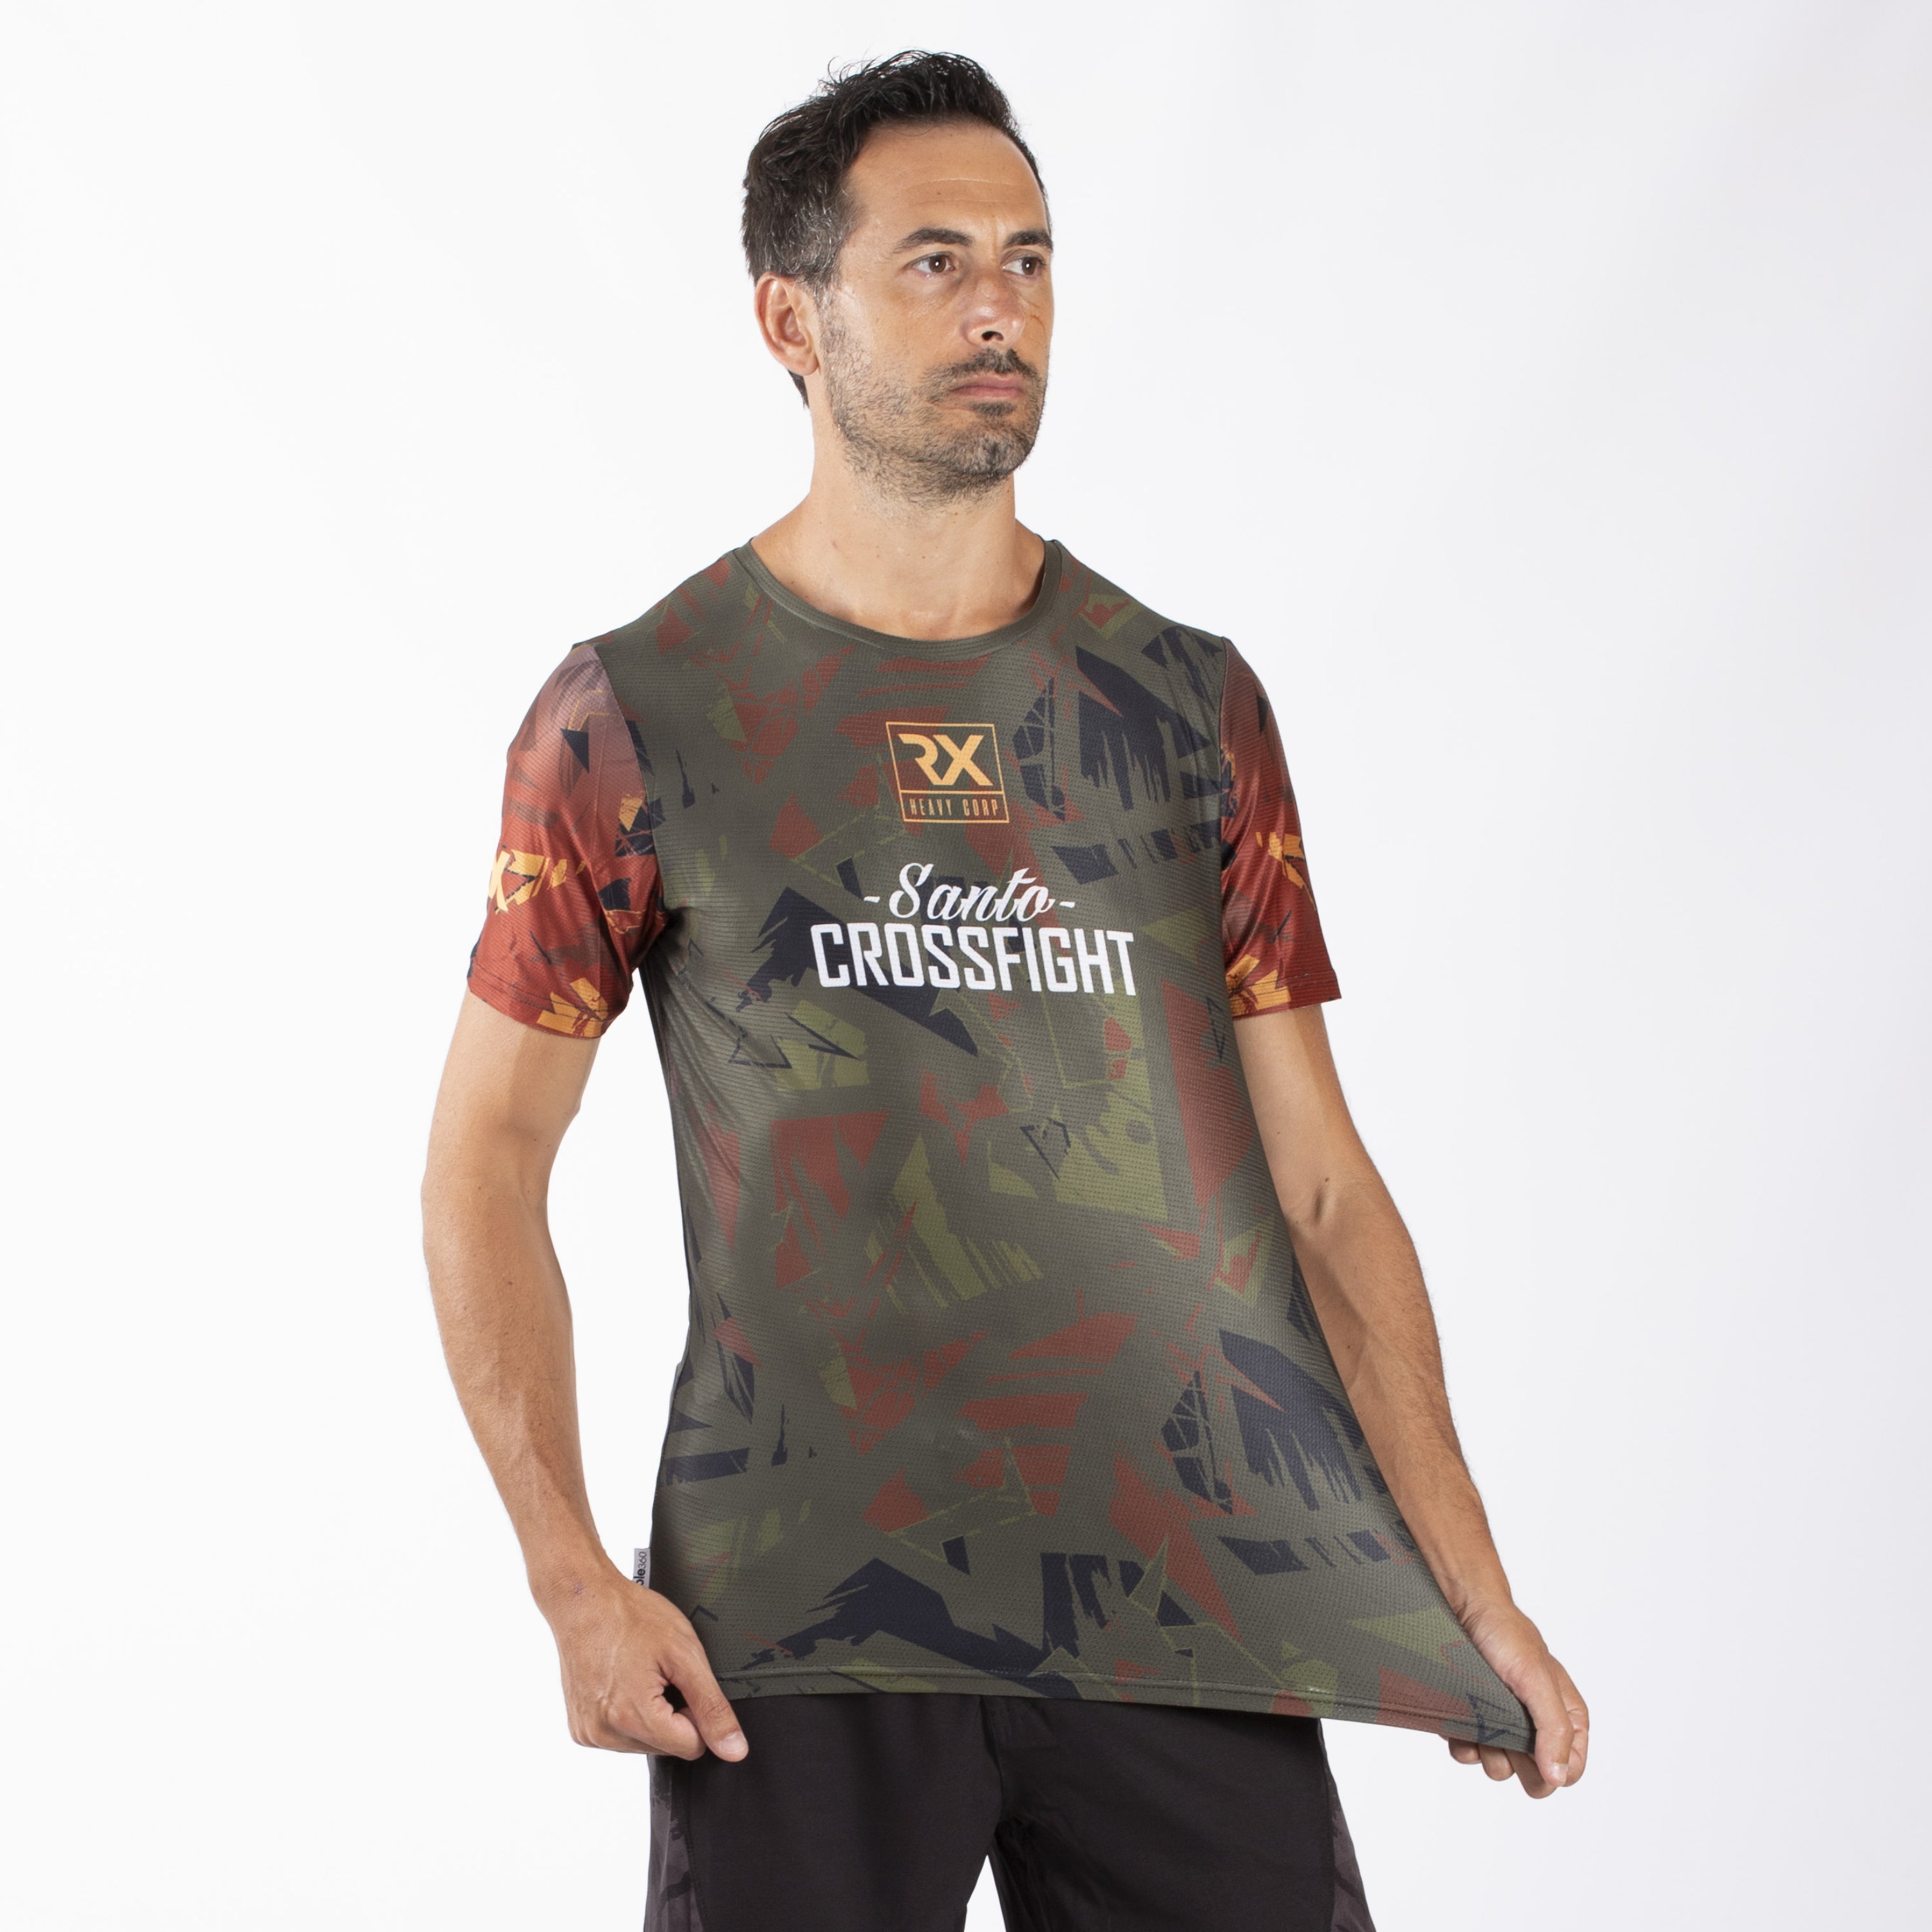 Camiseta Cross Training técnica SANTO CROSSFIGHT - Rx Heavy  acabado militar